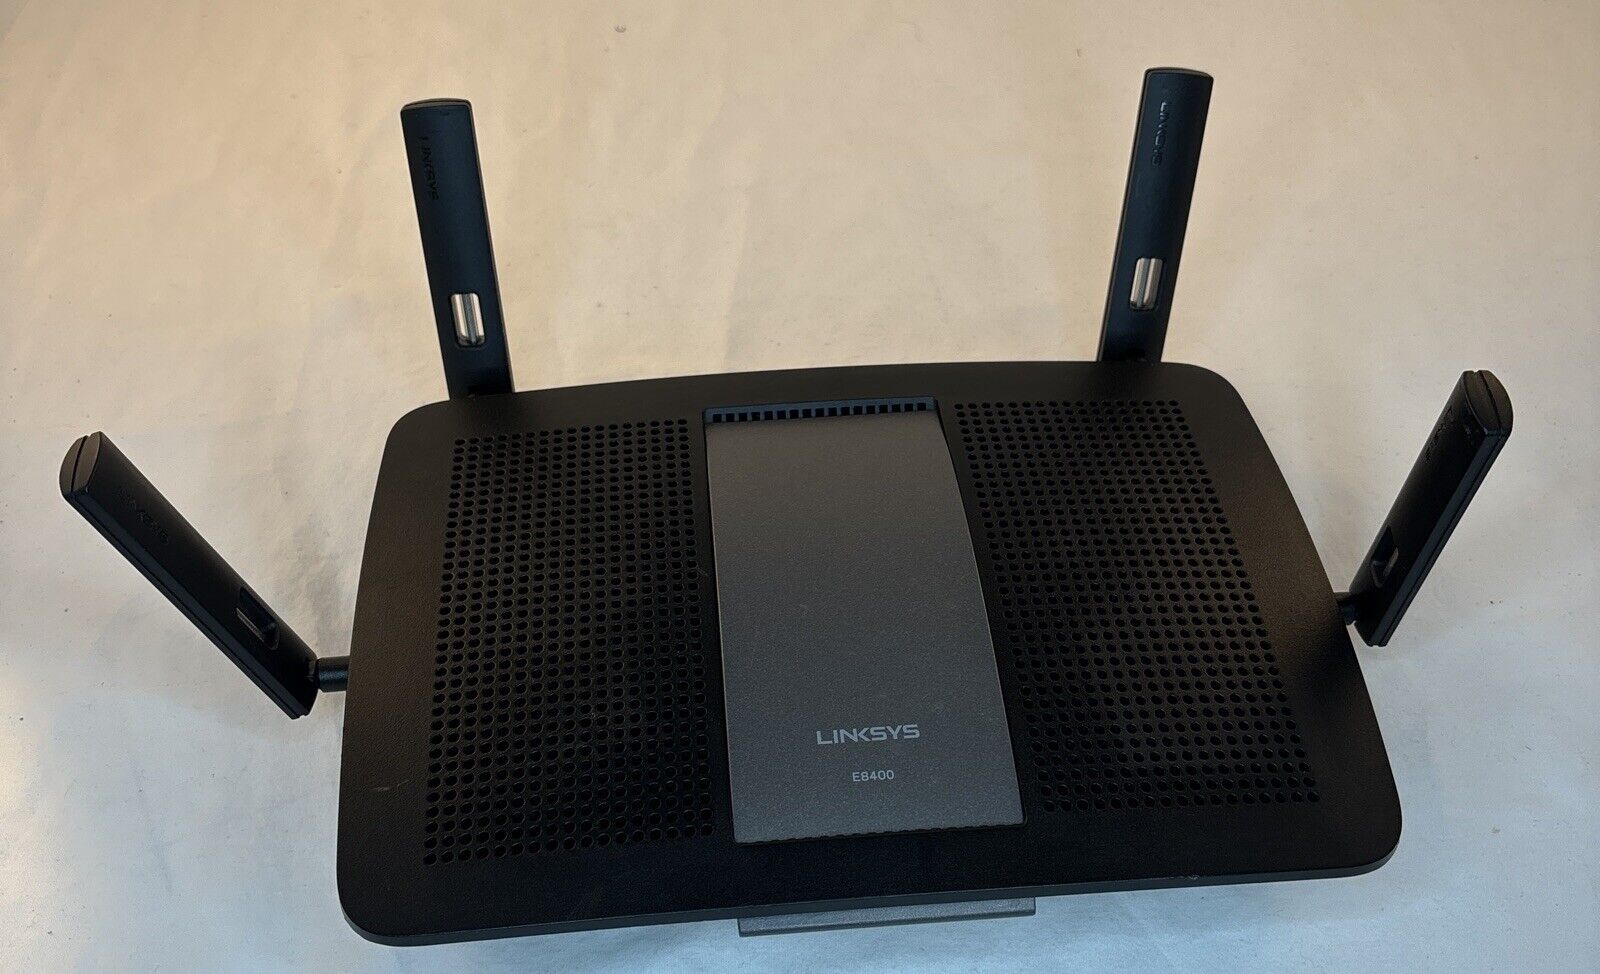 Linksys E8400 AC2400 Wireless WiFi Gigabit Dual Band Router